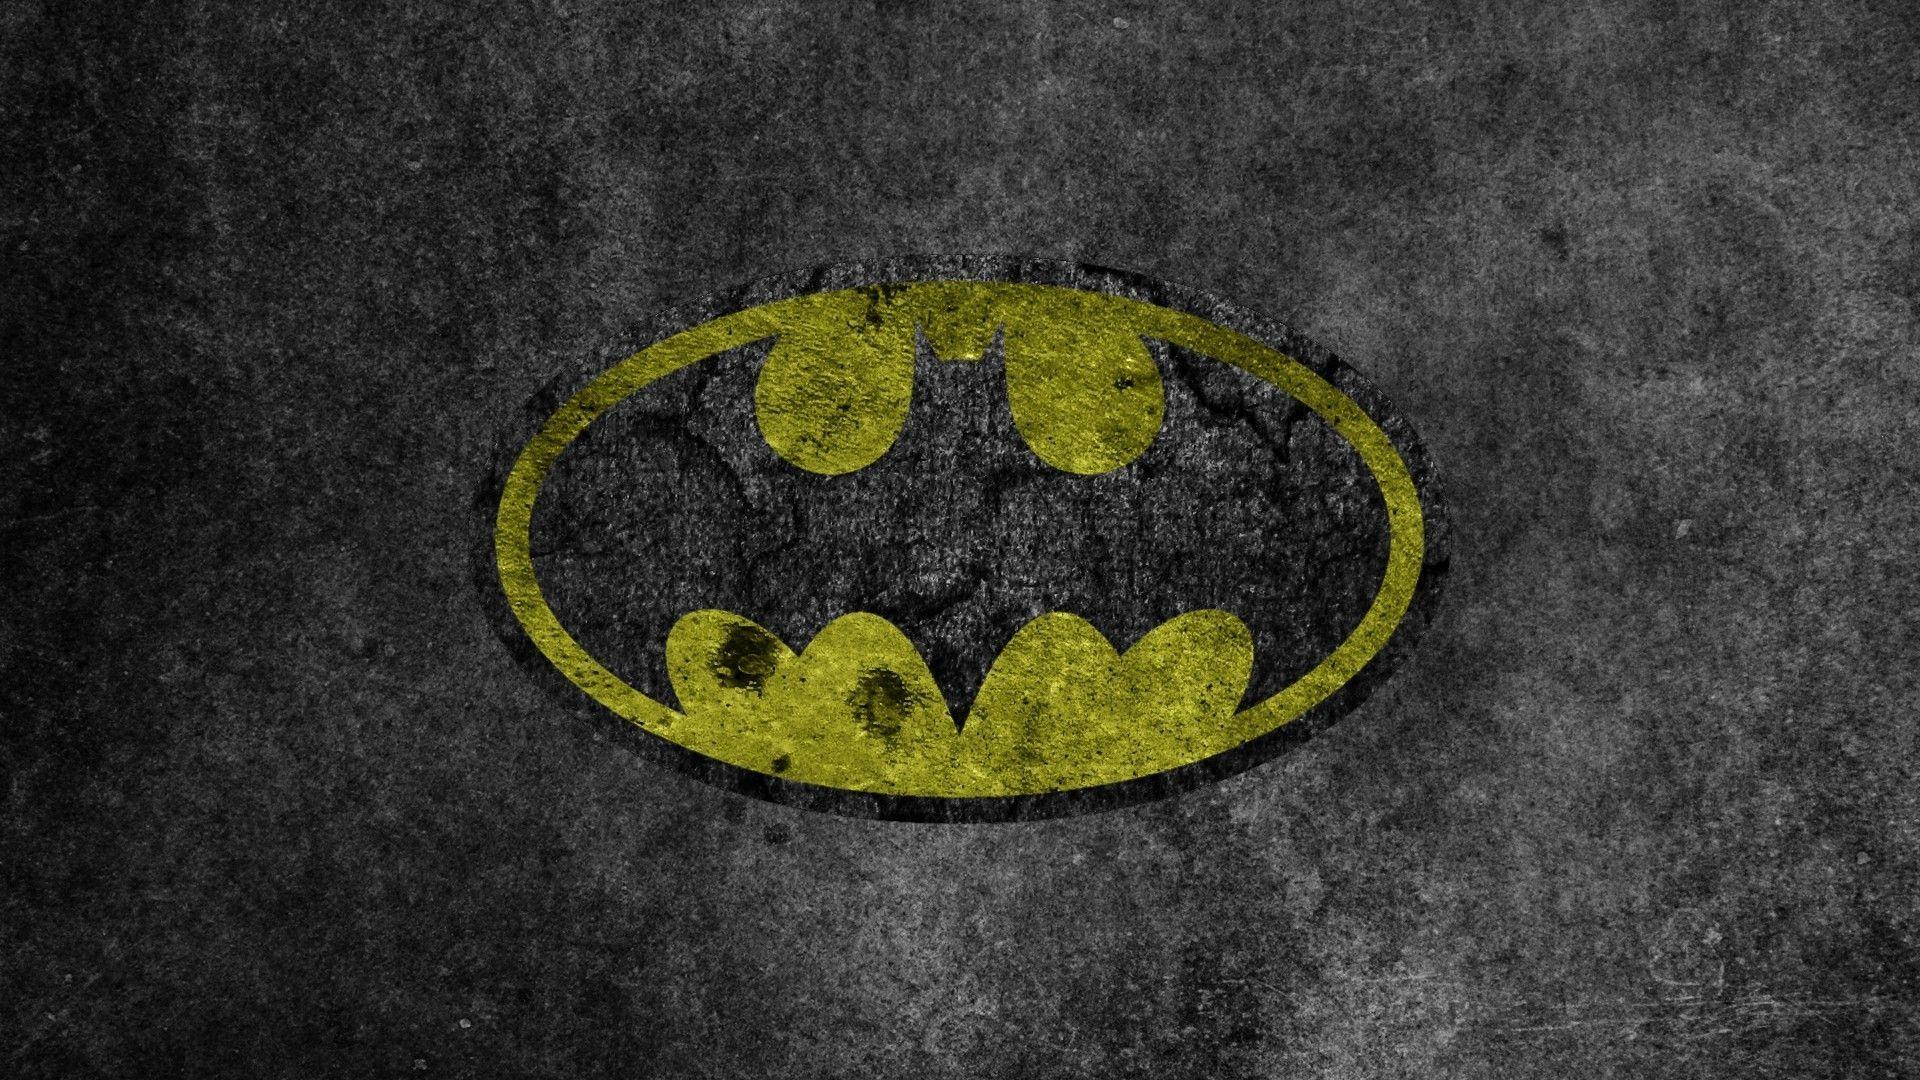 Batman Wallpaper for mobile phone, tablet, desktop computer and